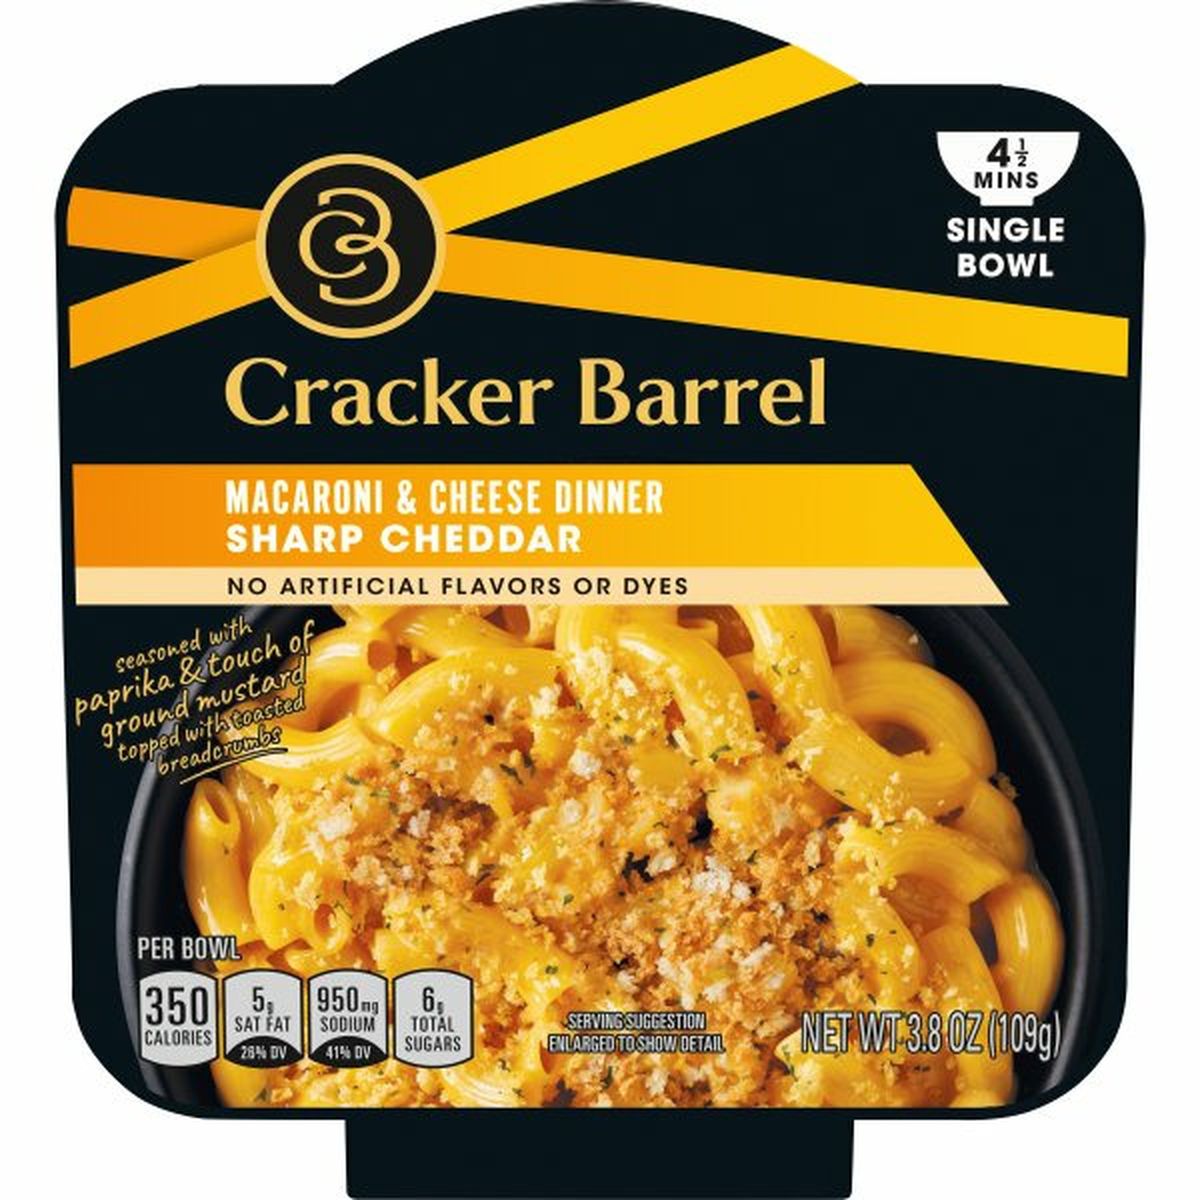 Calories in Cracker Barrel Sharp Cheddar Single Bowl Macaroni & Cheese